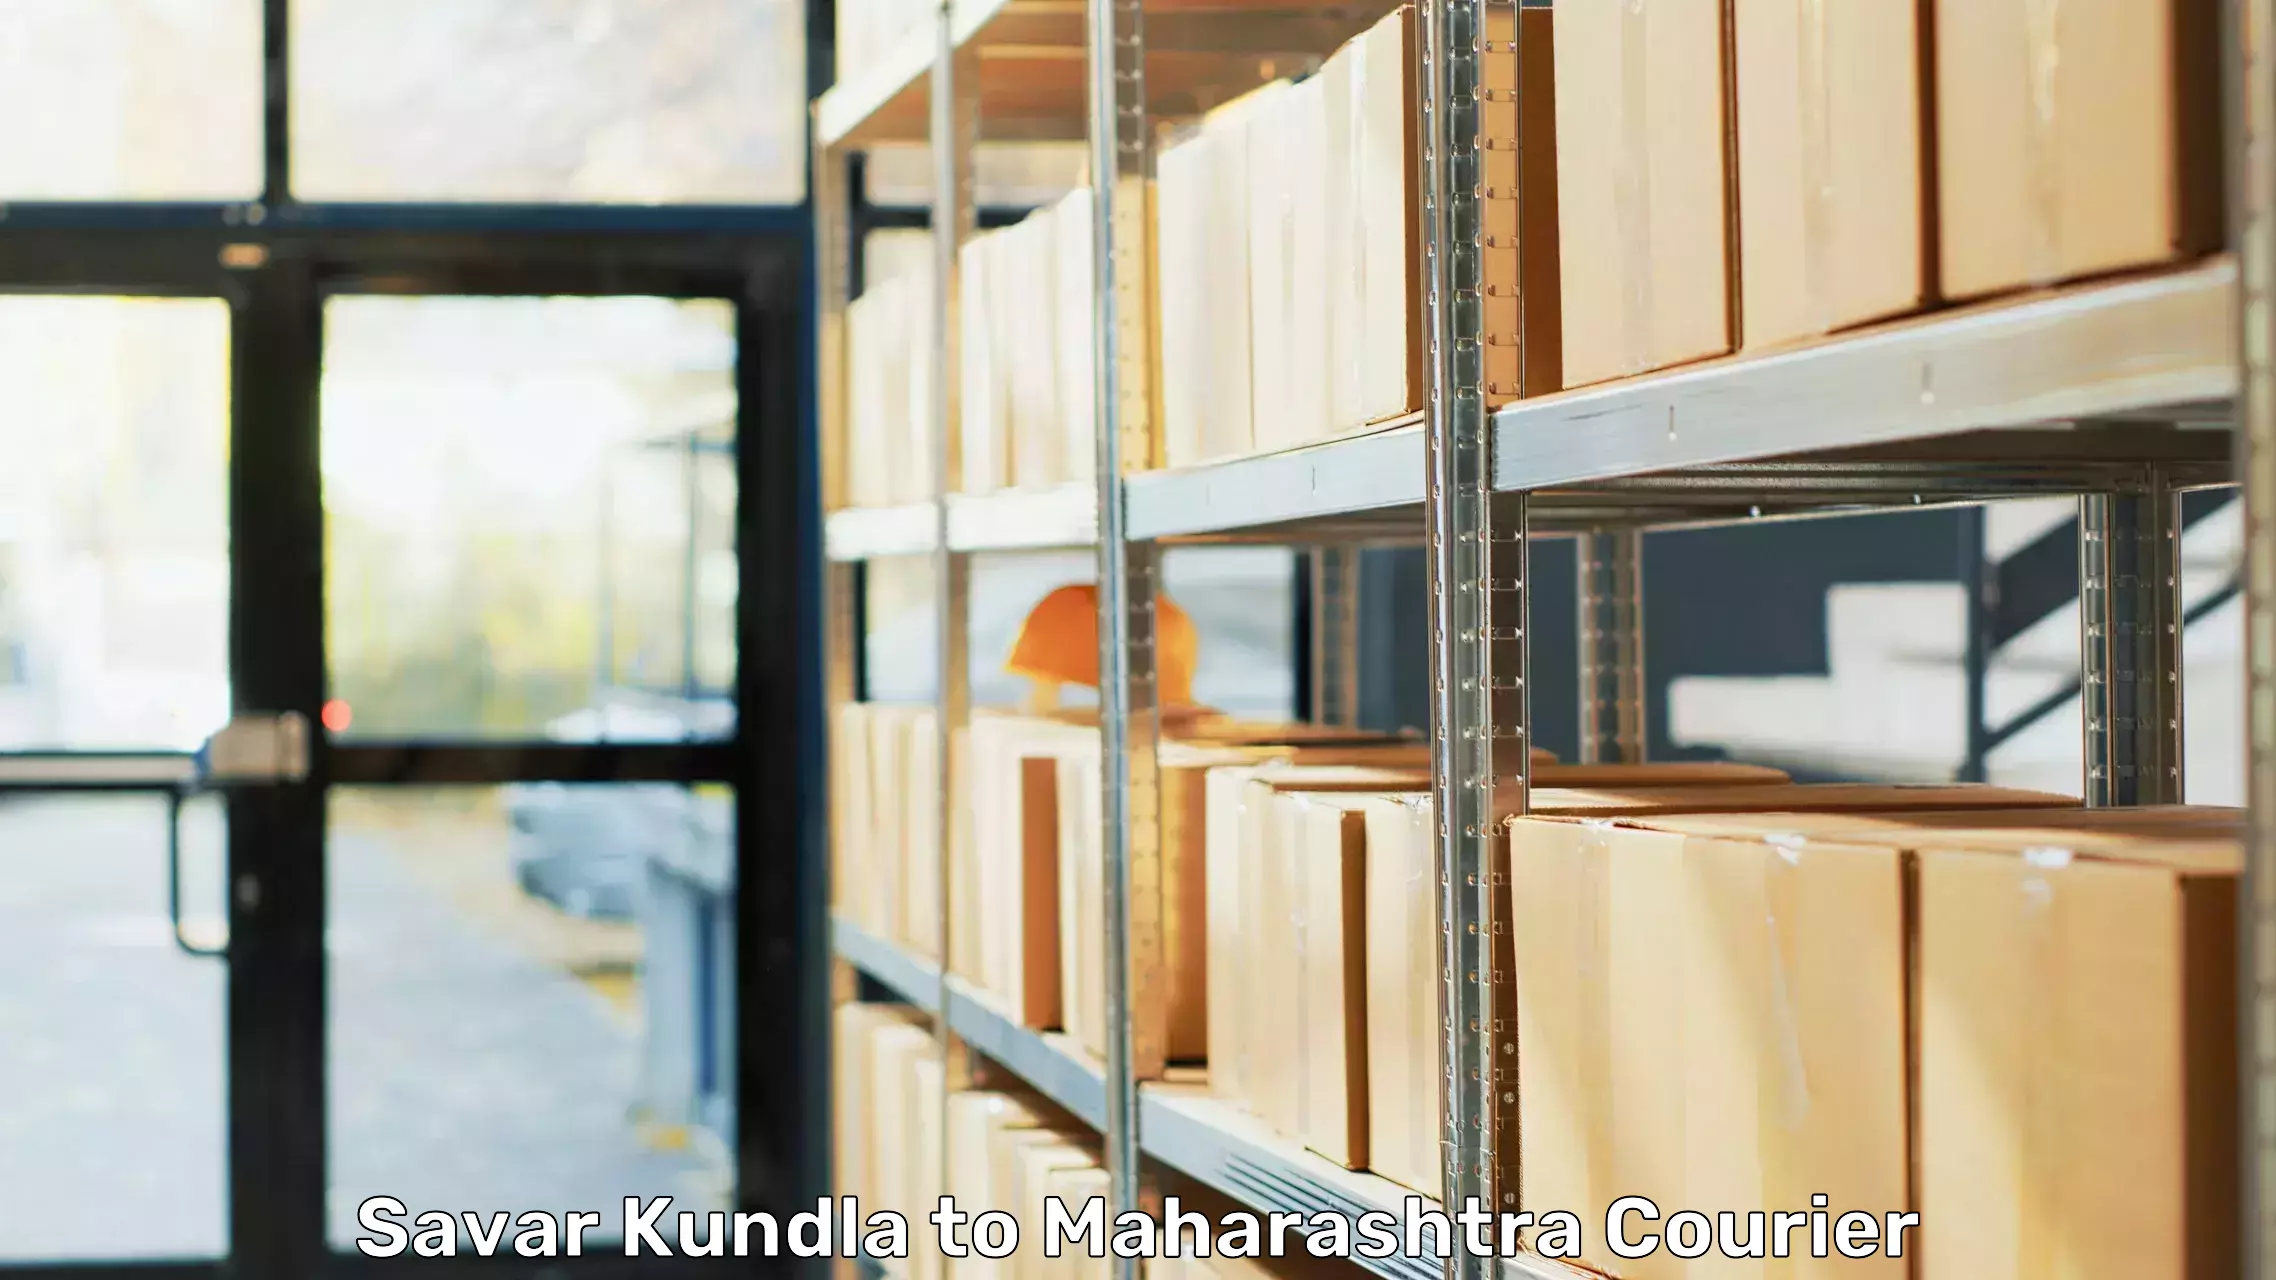 Moving and storage services Savar Kundla to Tata Institute of Social Sciences Mumbai